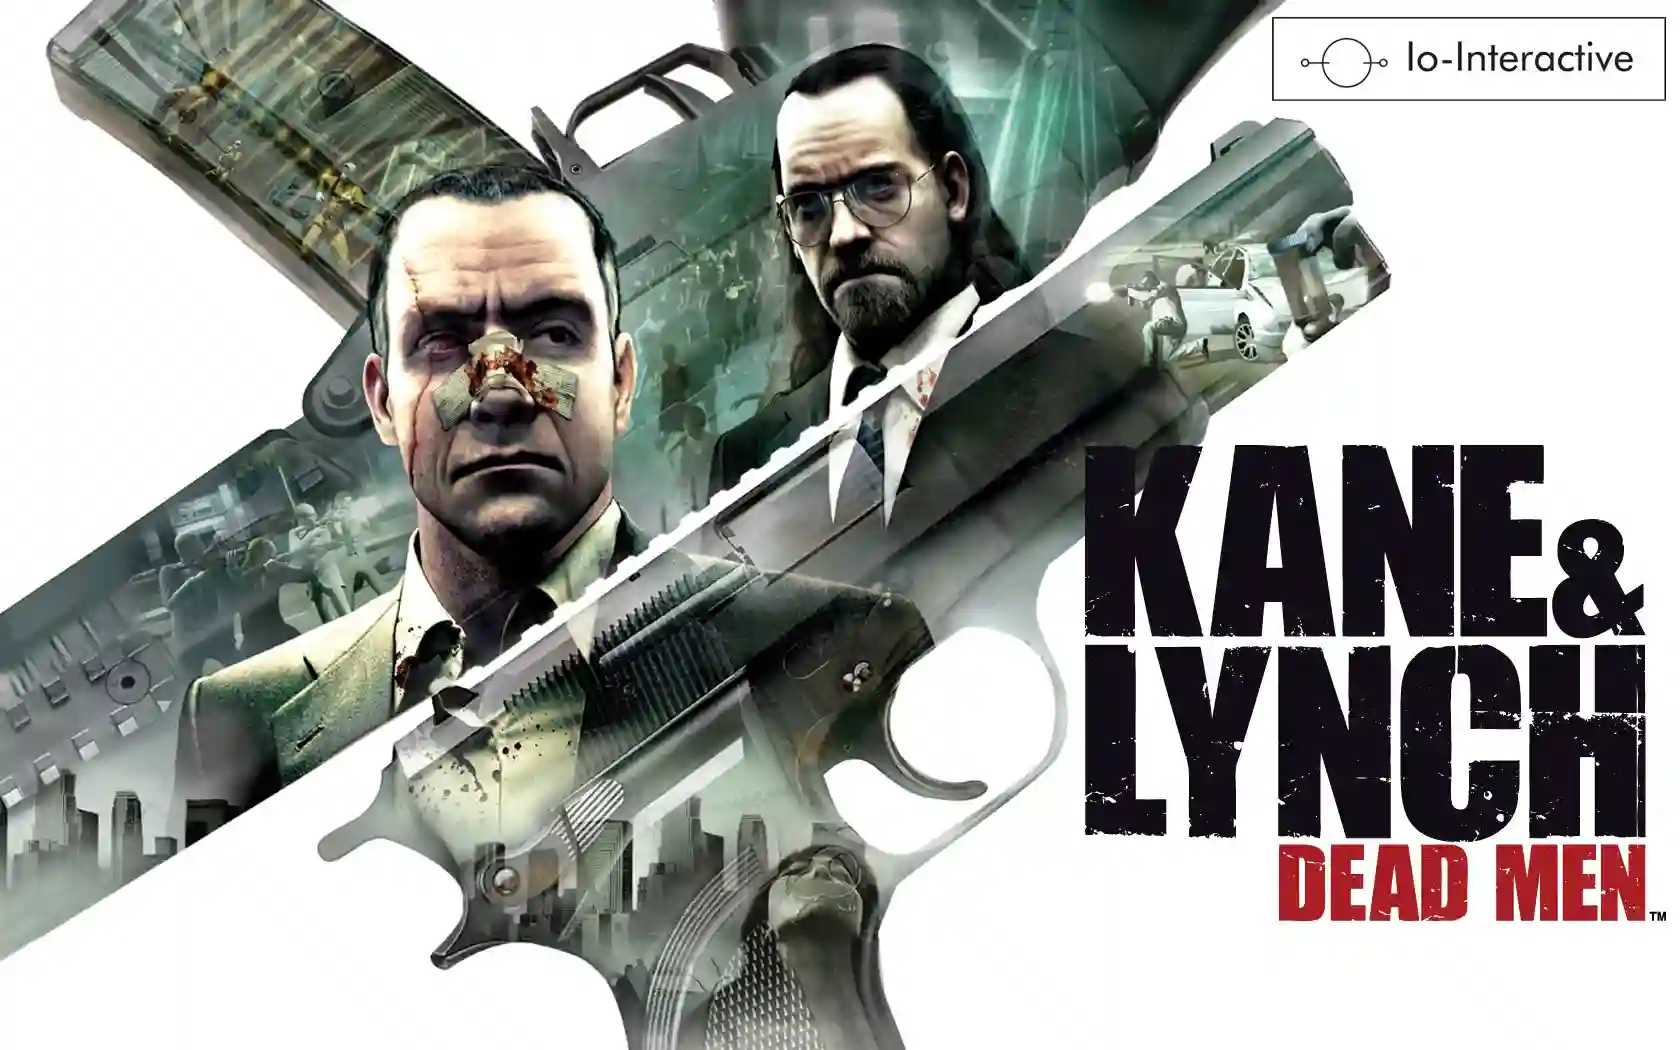 Kane and Lynch Dead Men